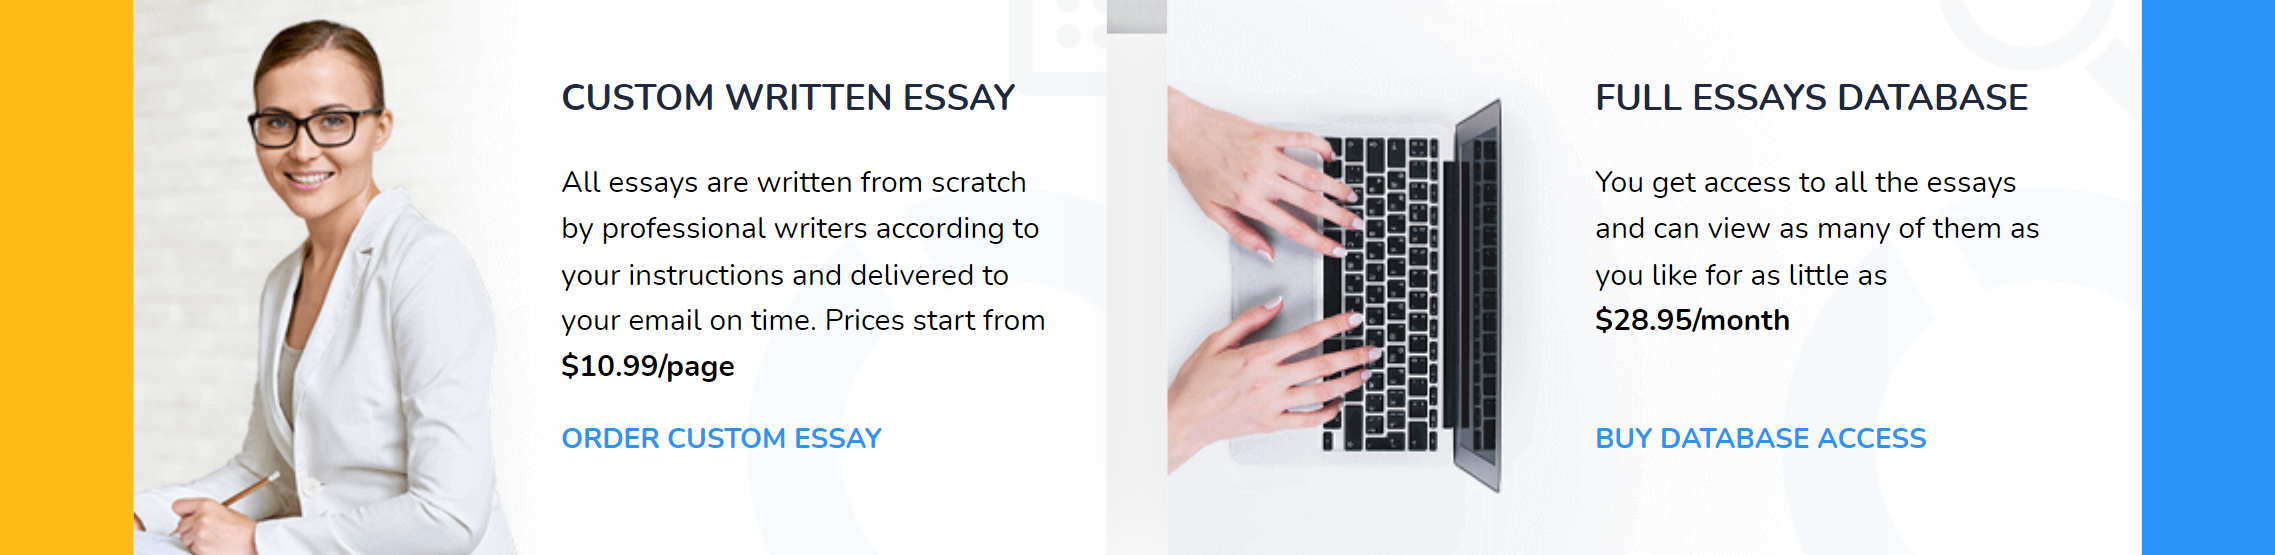 essaysbank.com Services